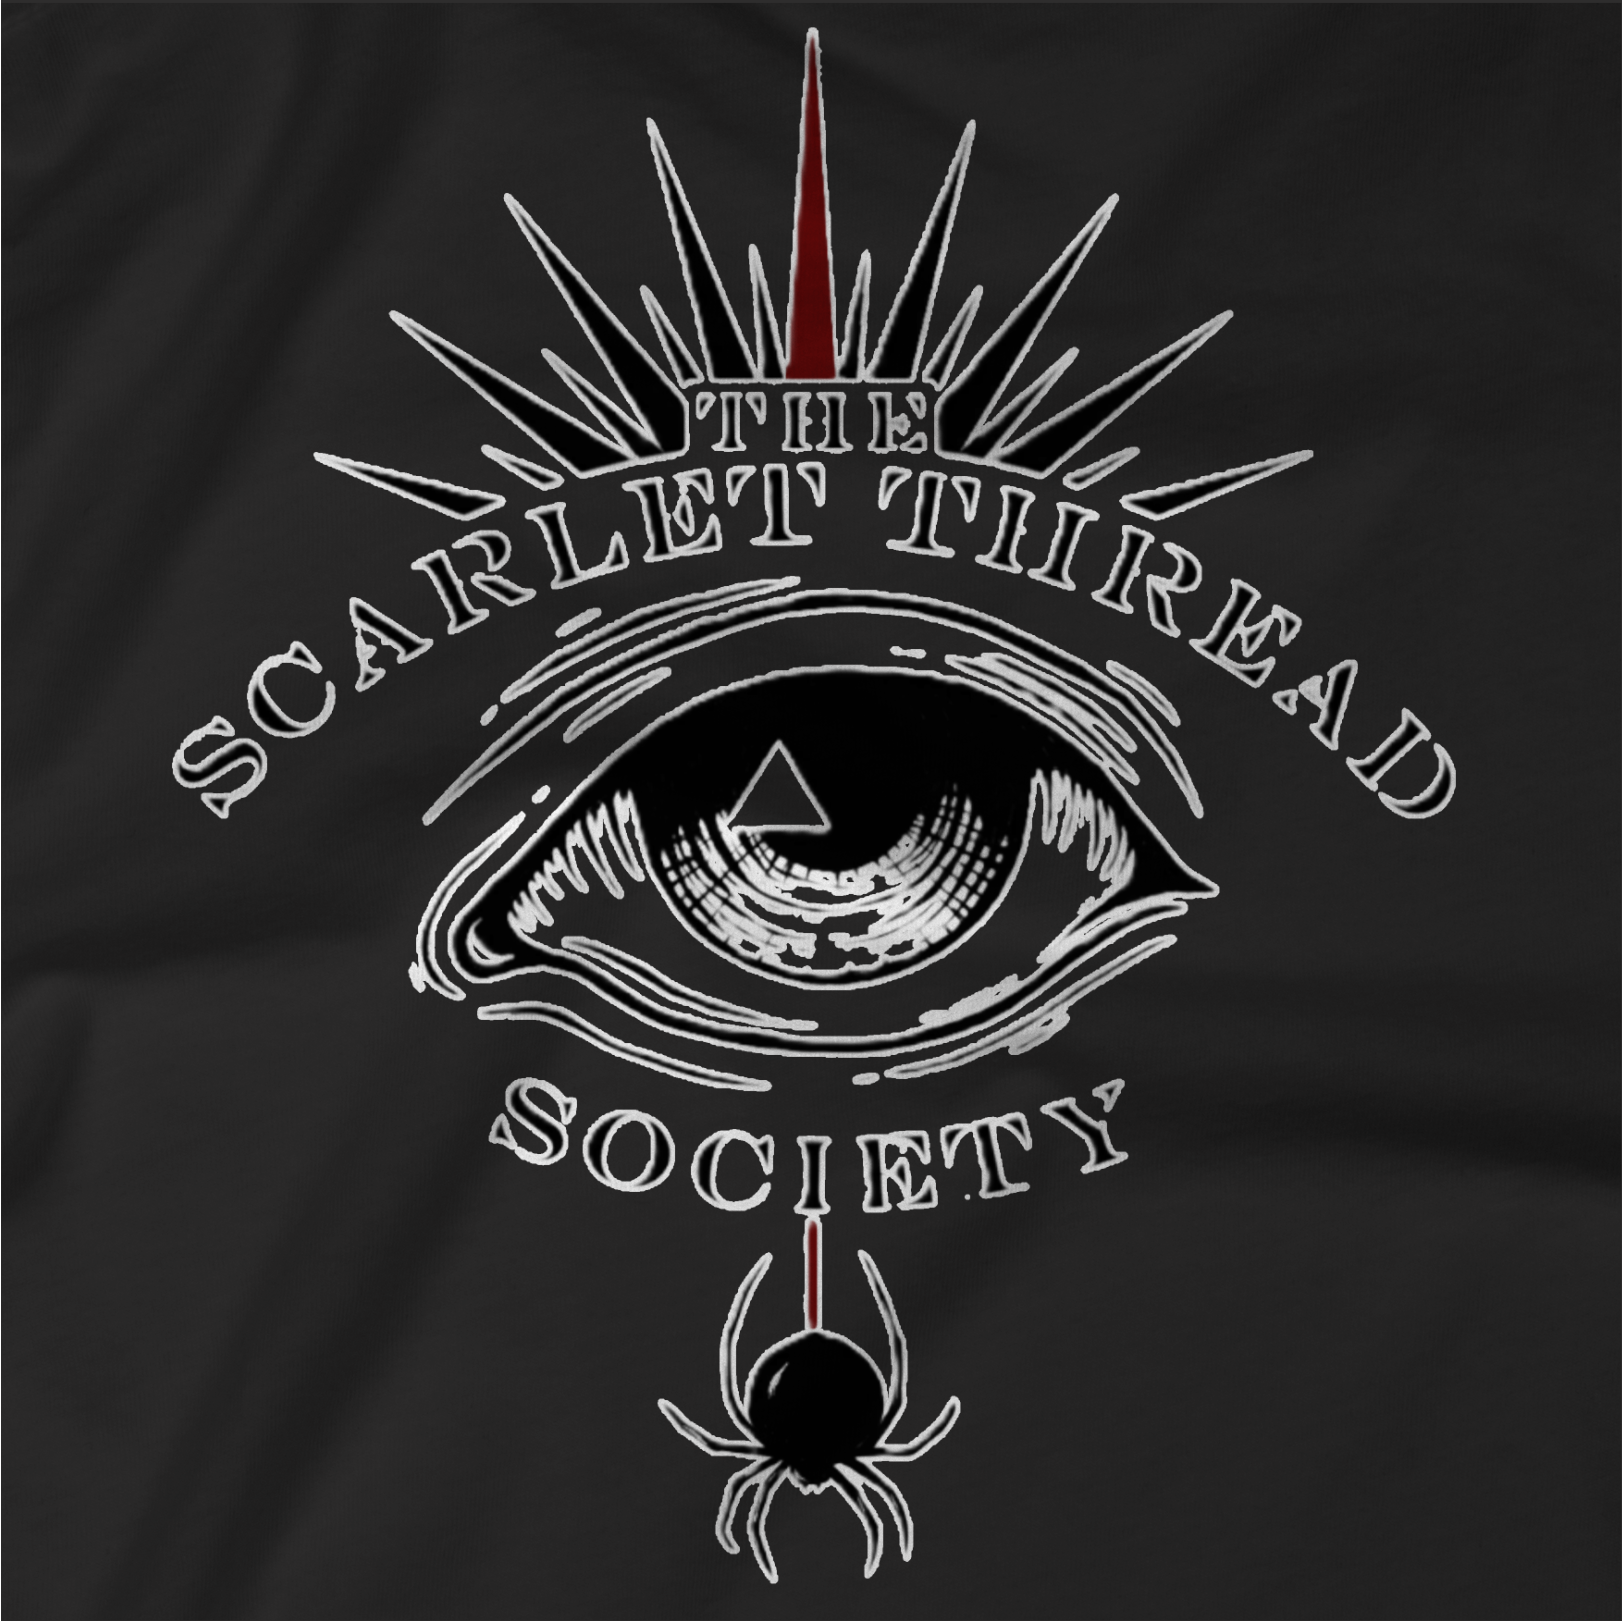 Scarlet Thread Society